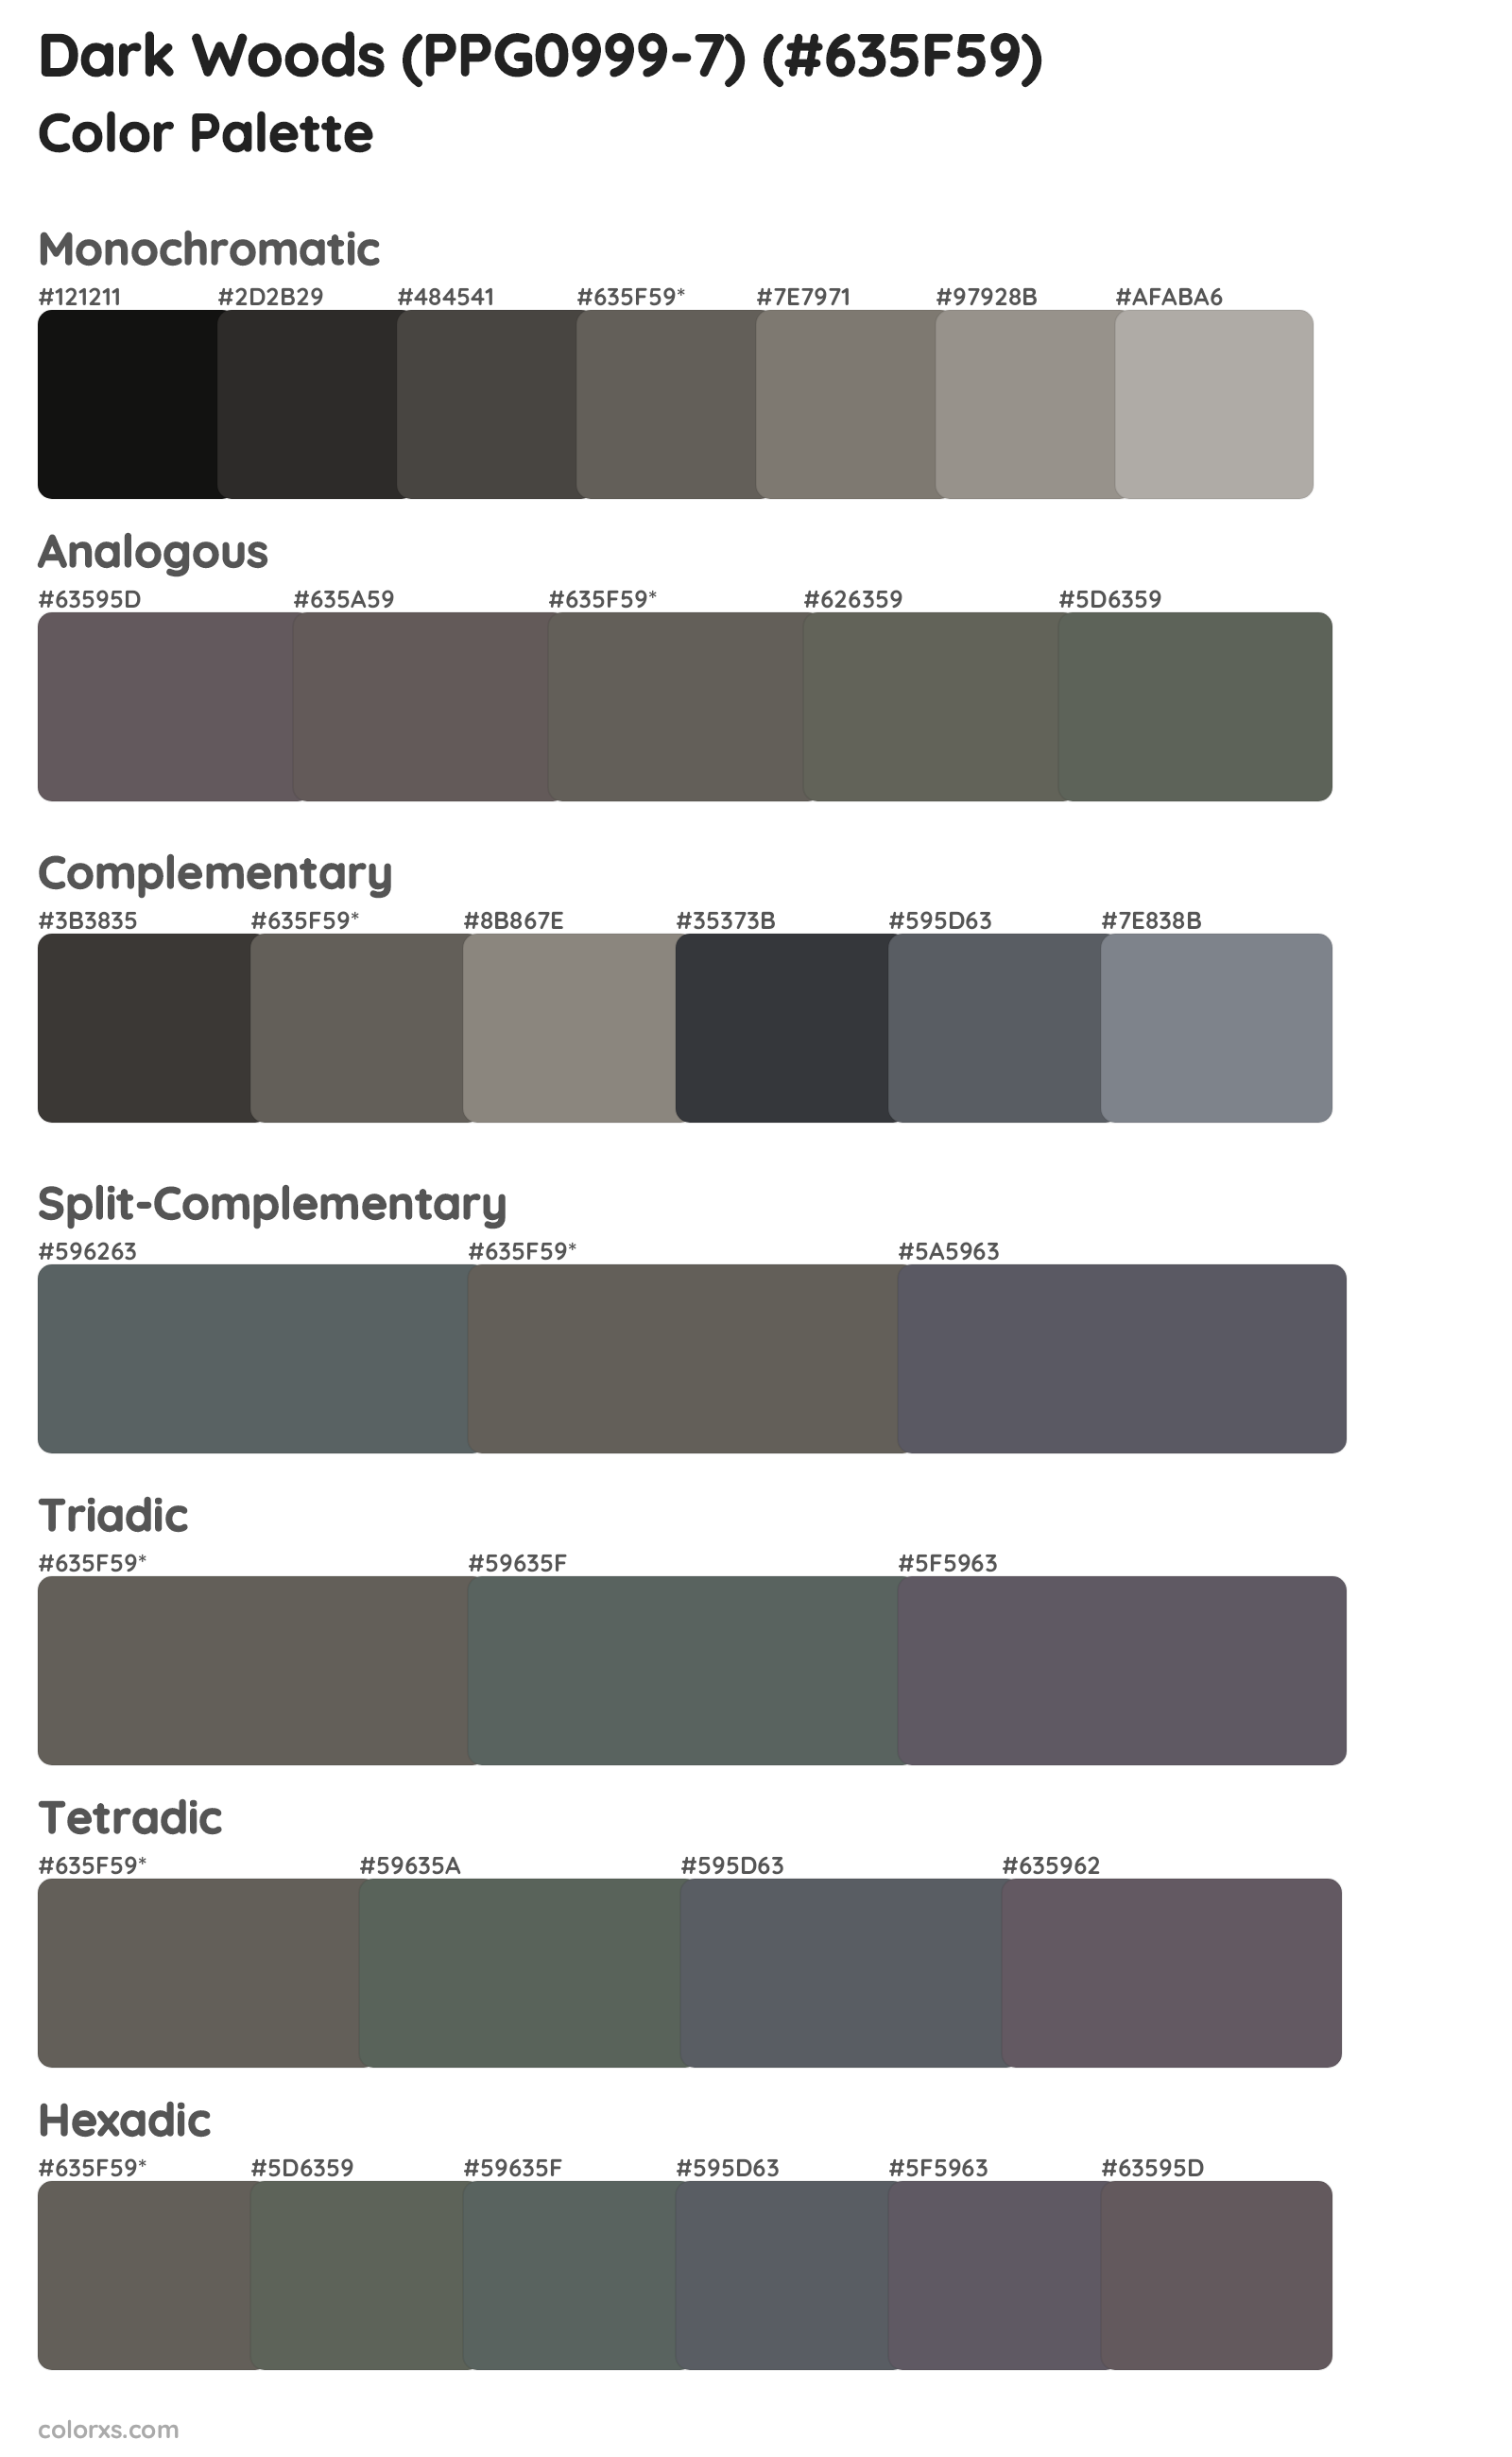 Dark Woods (PPG0999-7) Color Scheme Palettes